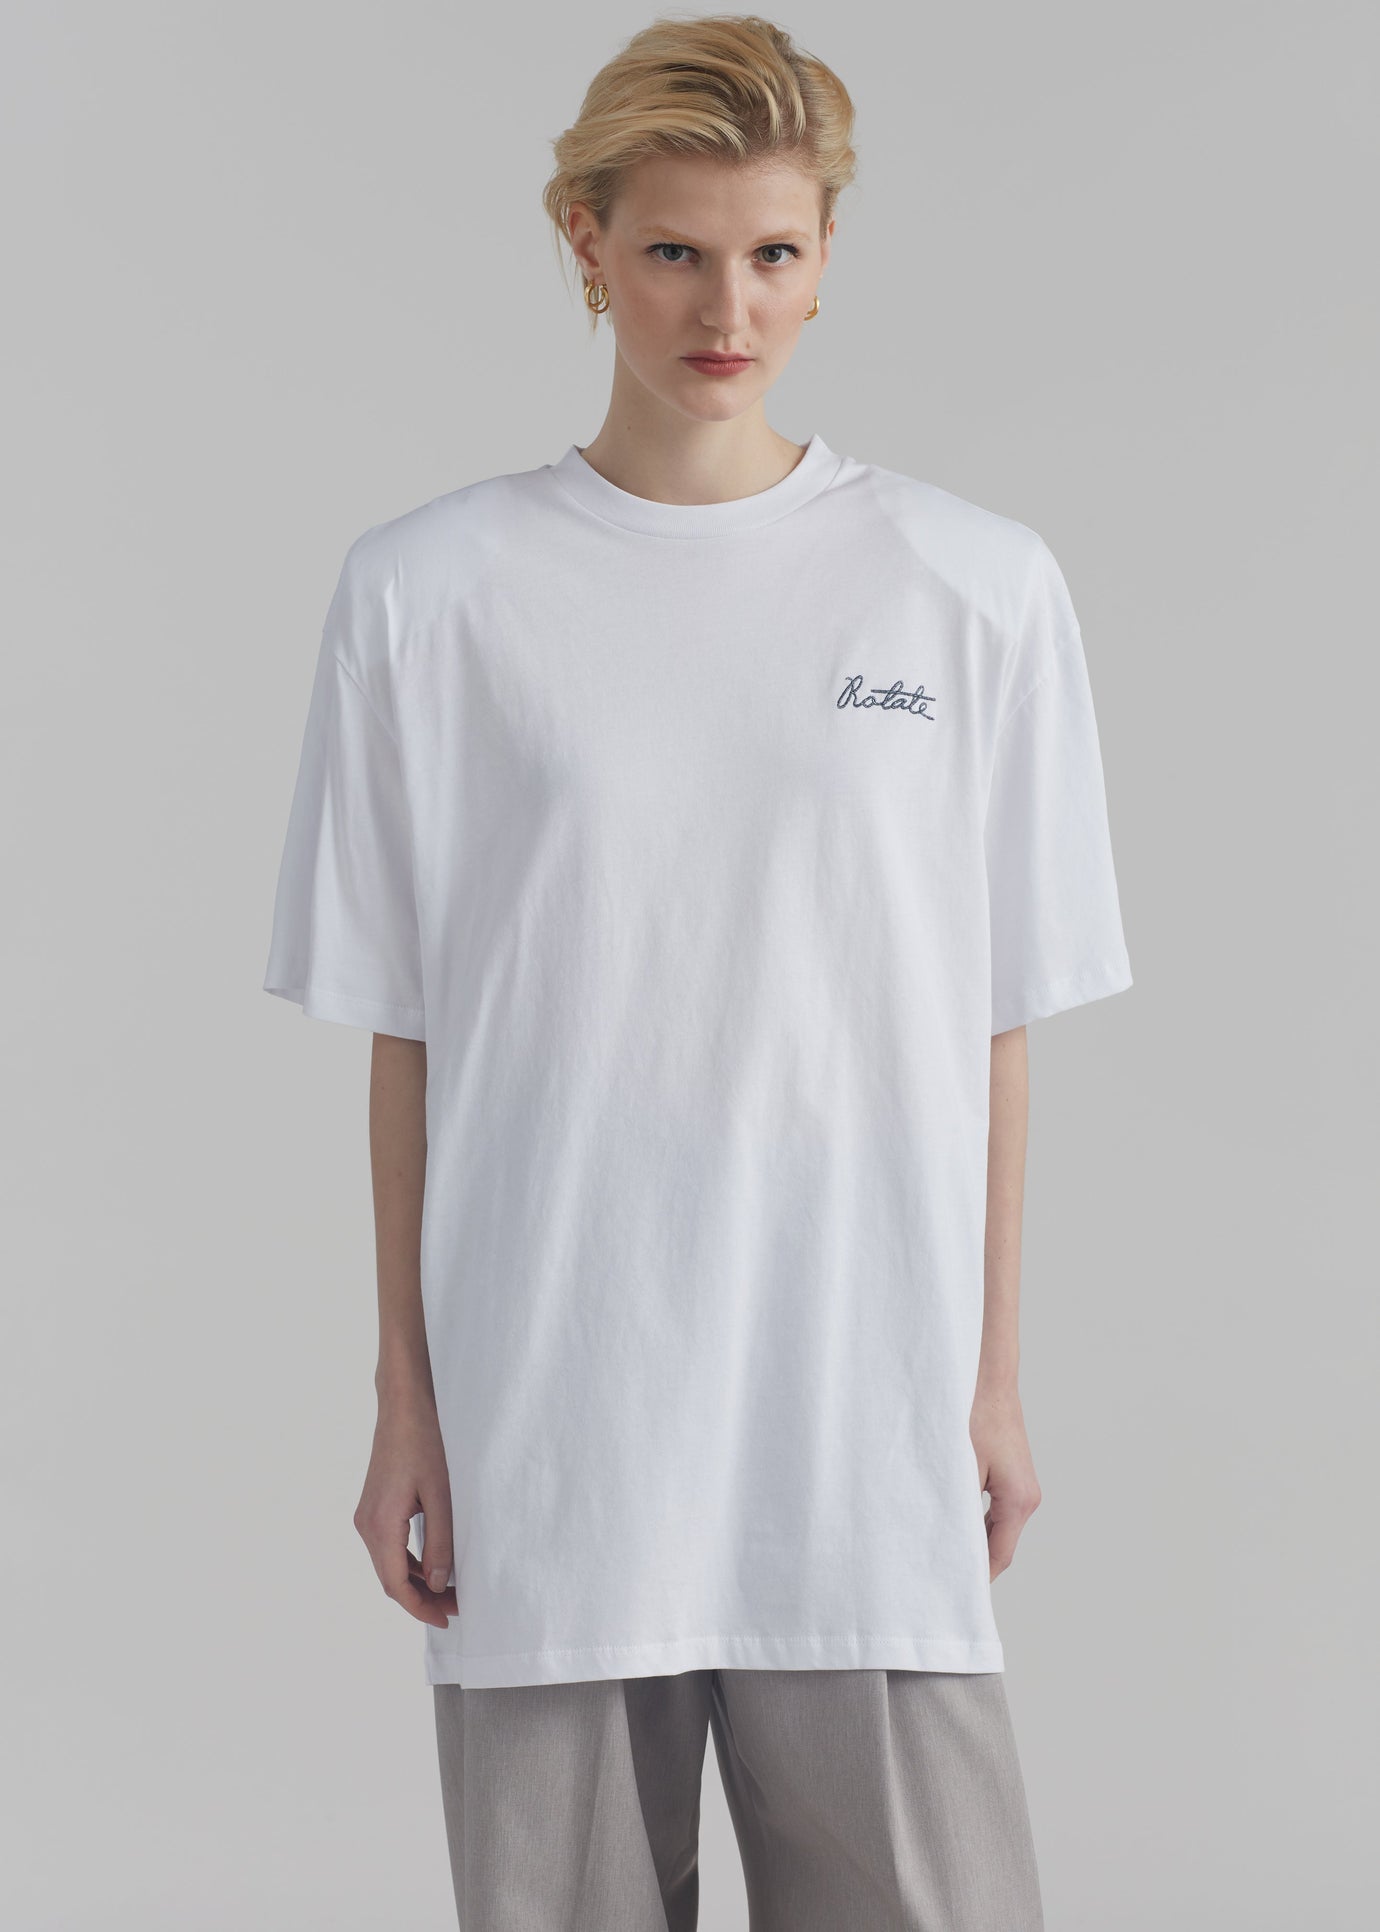 Rotate Oversized Logo T-Shirt - Bright White - 1